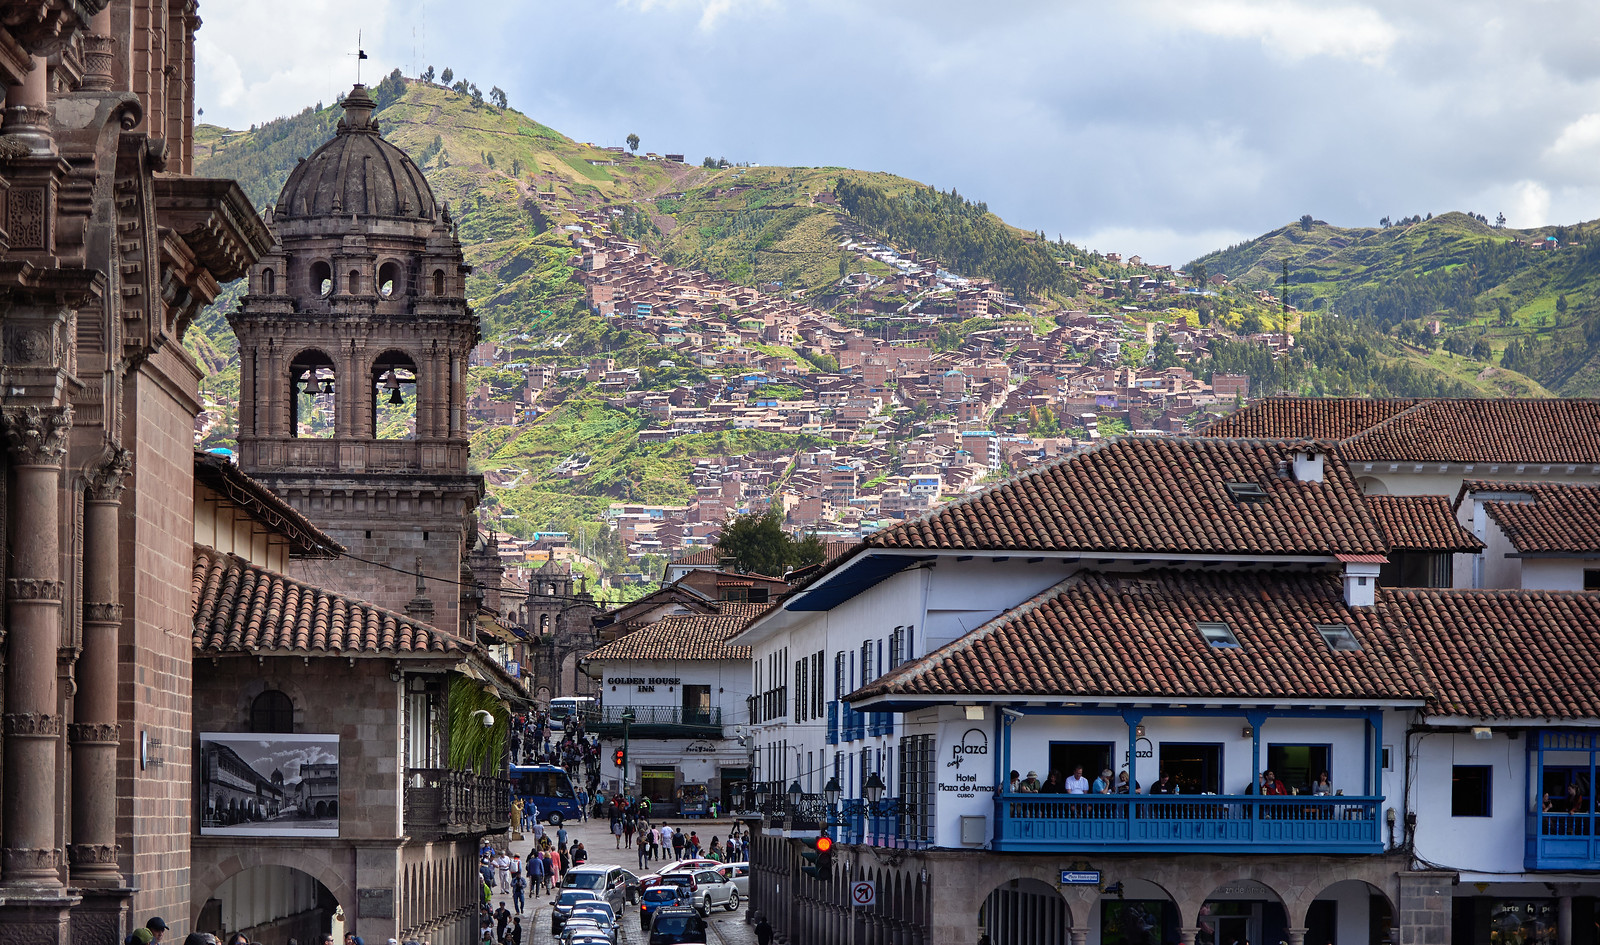 Cusco - A city elevated